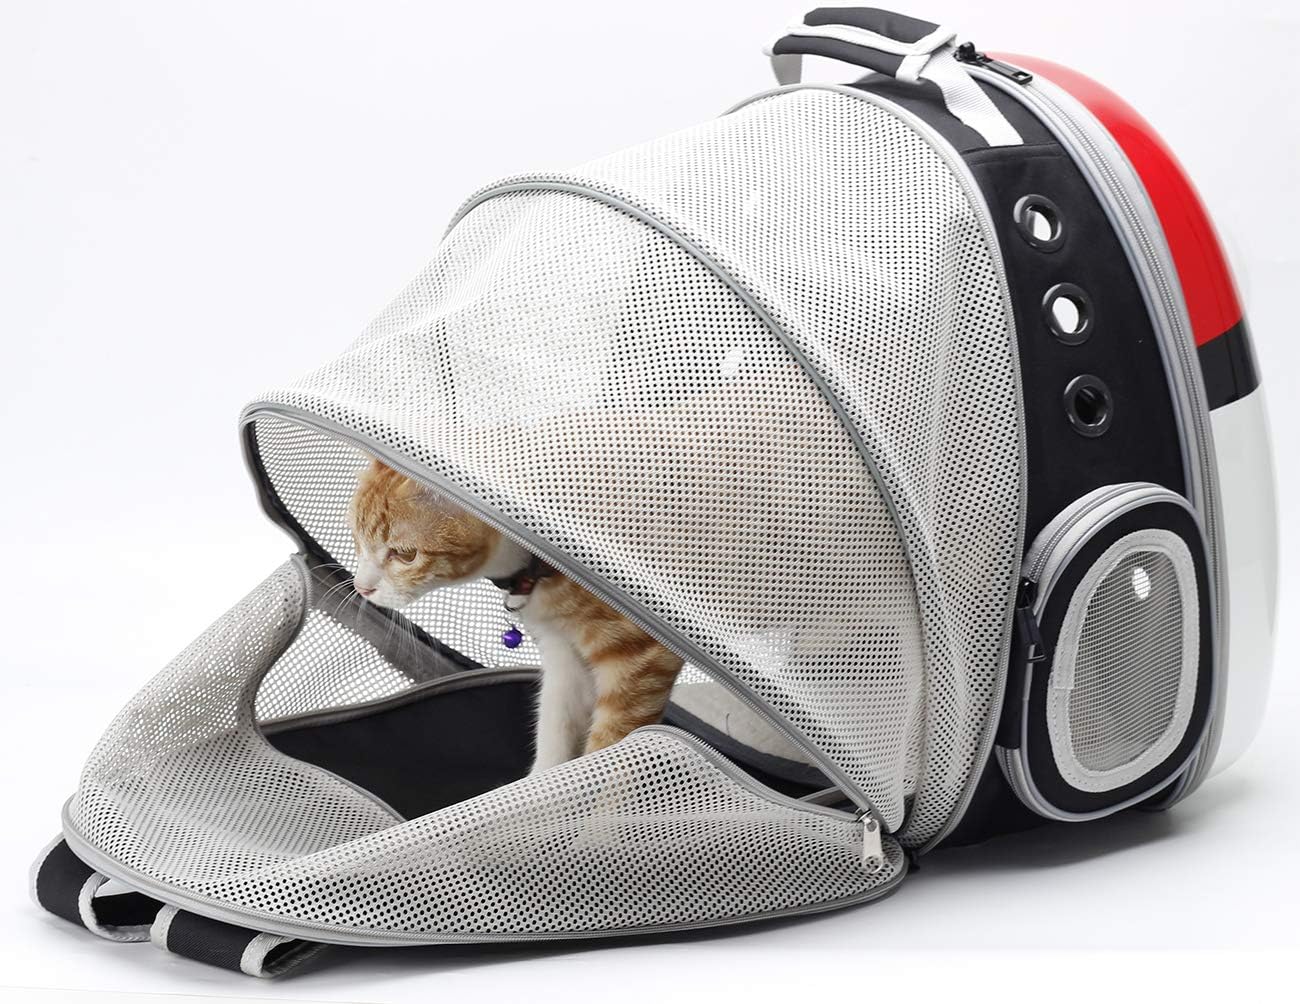 Mochila transportadora de gatos expandible, mochila para gatos, gatitos y